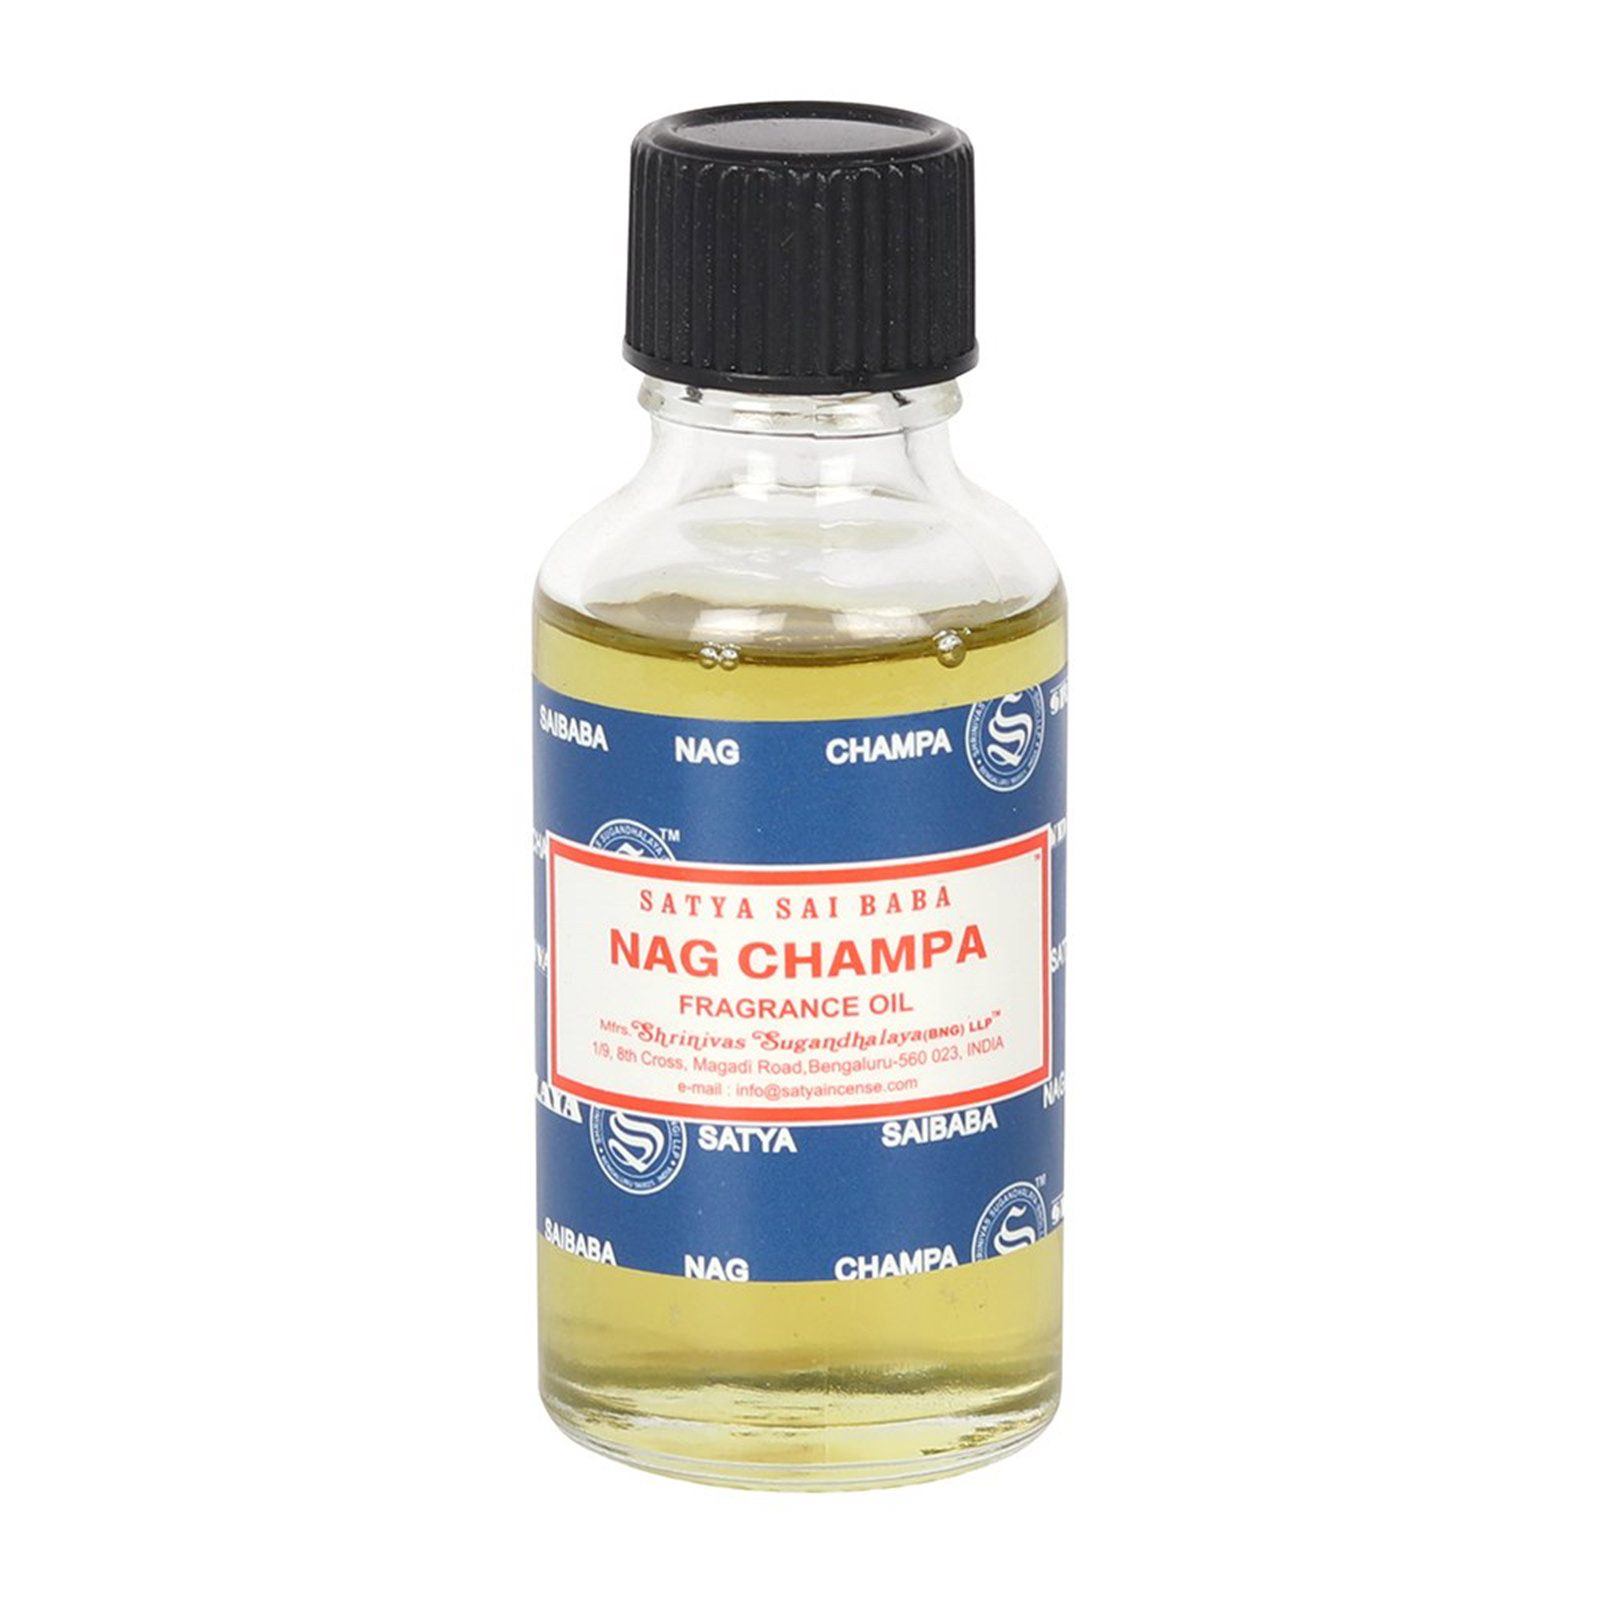 Nag Champa Perfume Oil